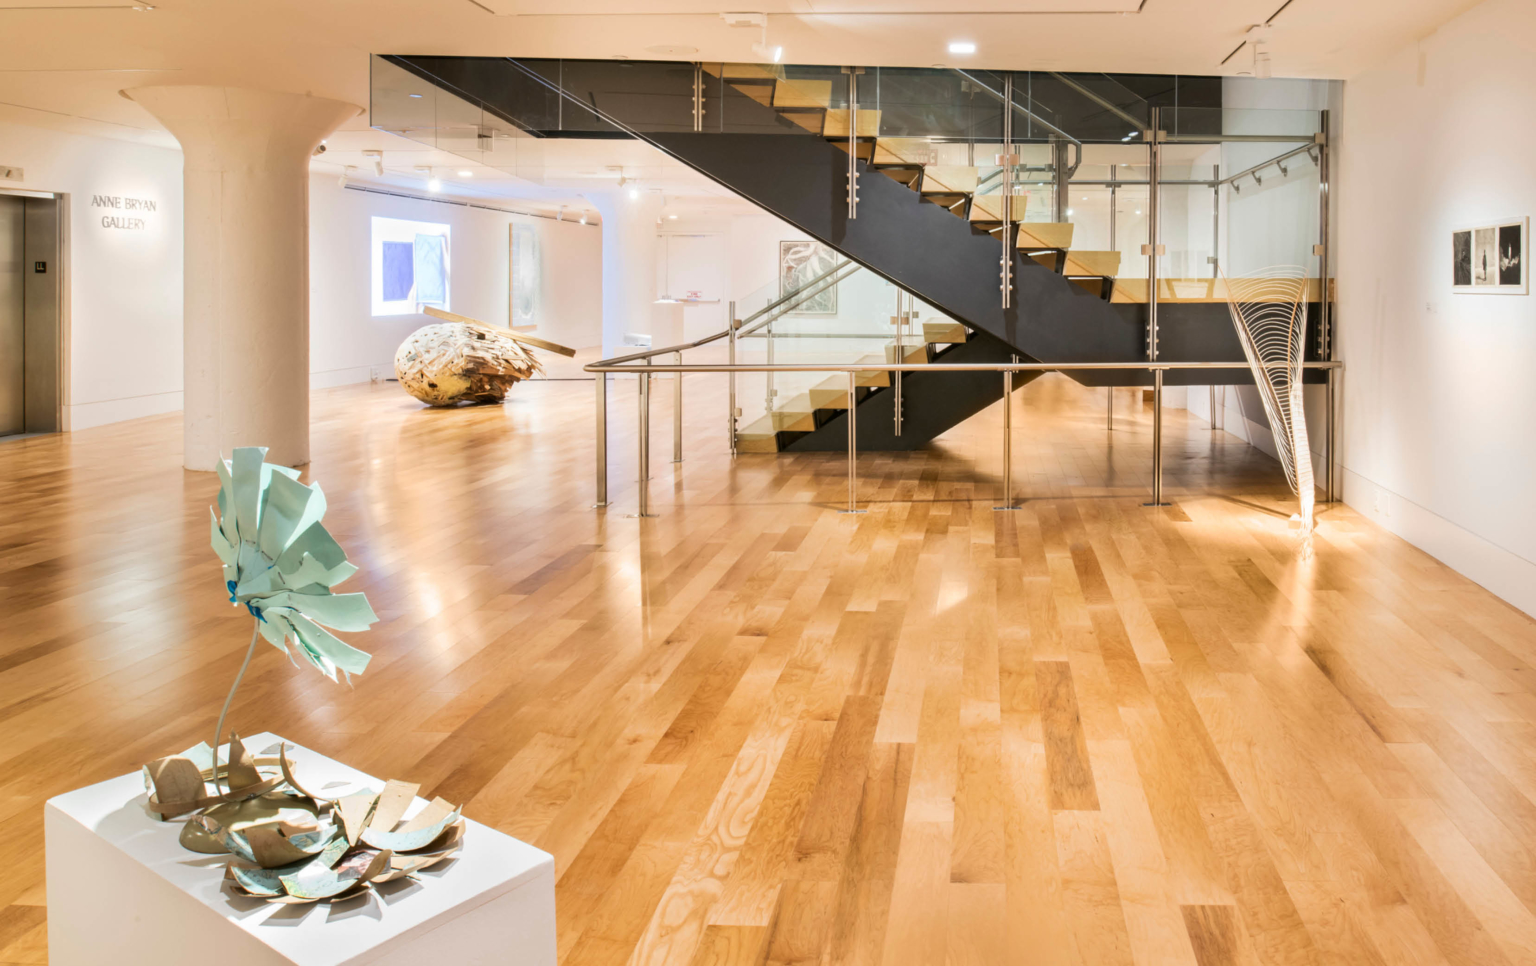 Wooden floors and staircase atThe John and Richanda Rhoden Arts Center